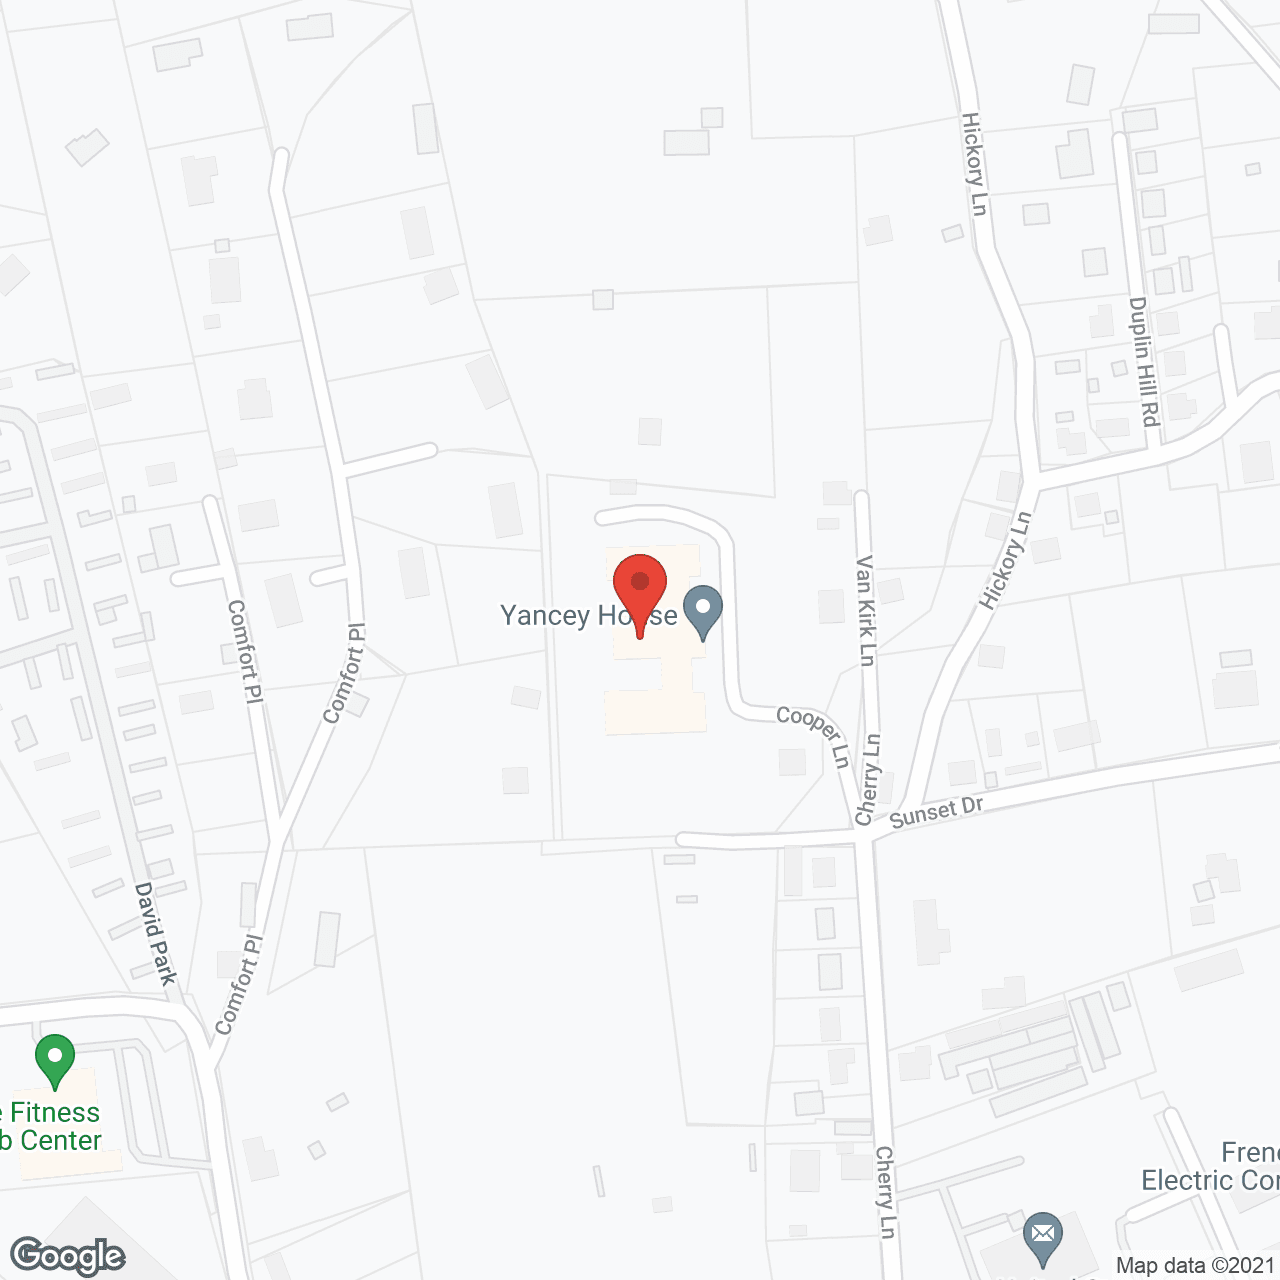 Yancey House in google map